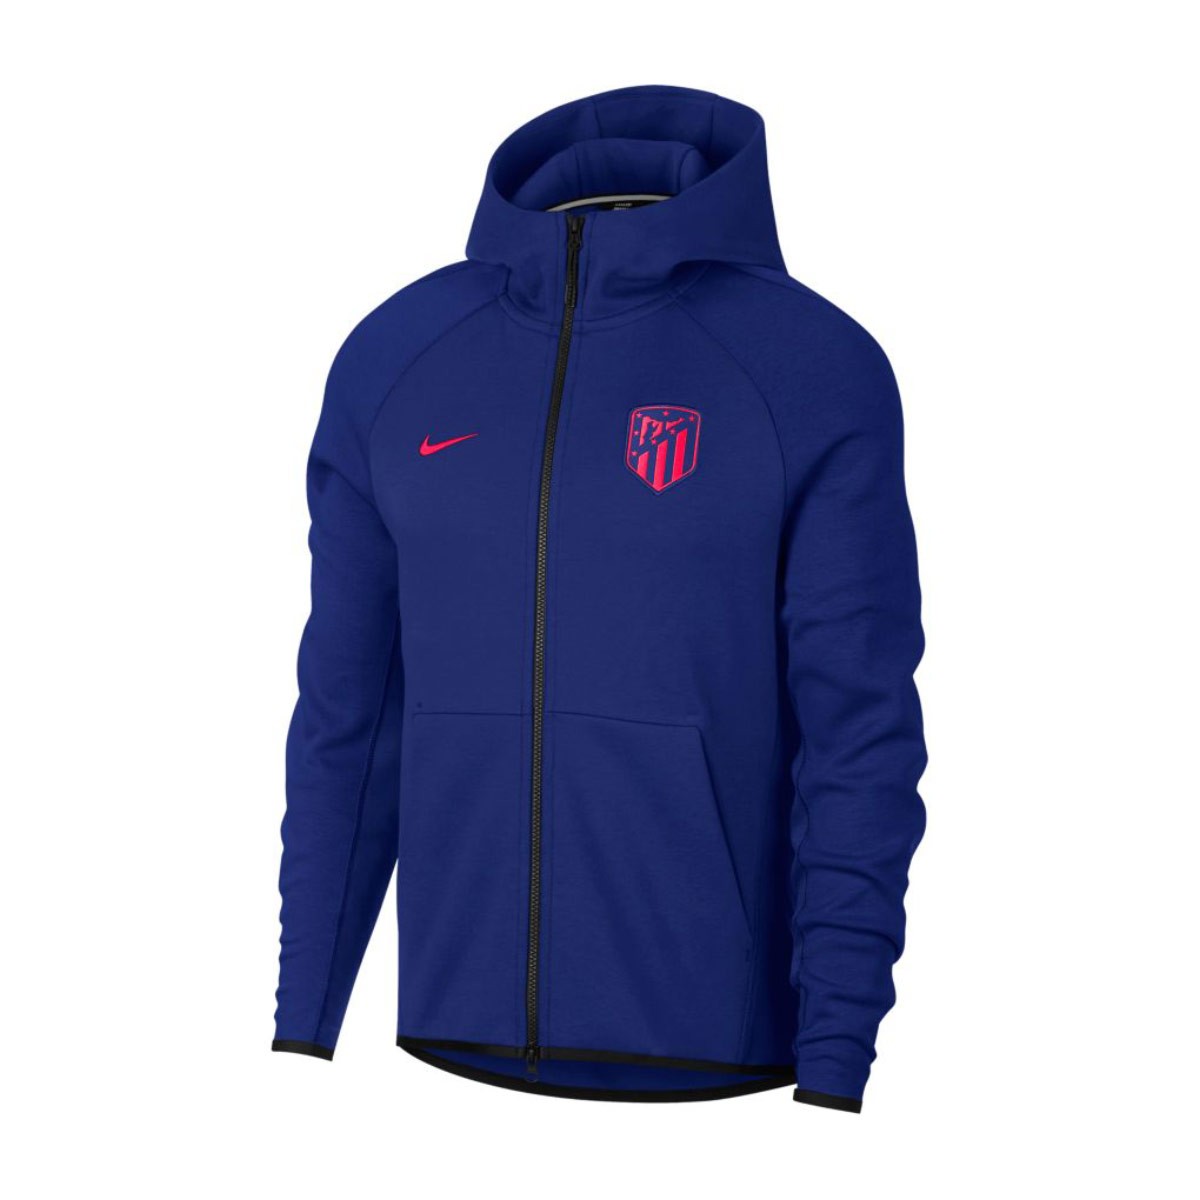 Jacket Nike NSW Atlético de Madrid Tech 